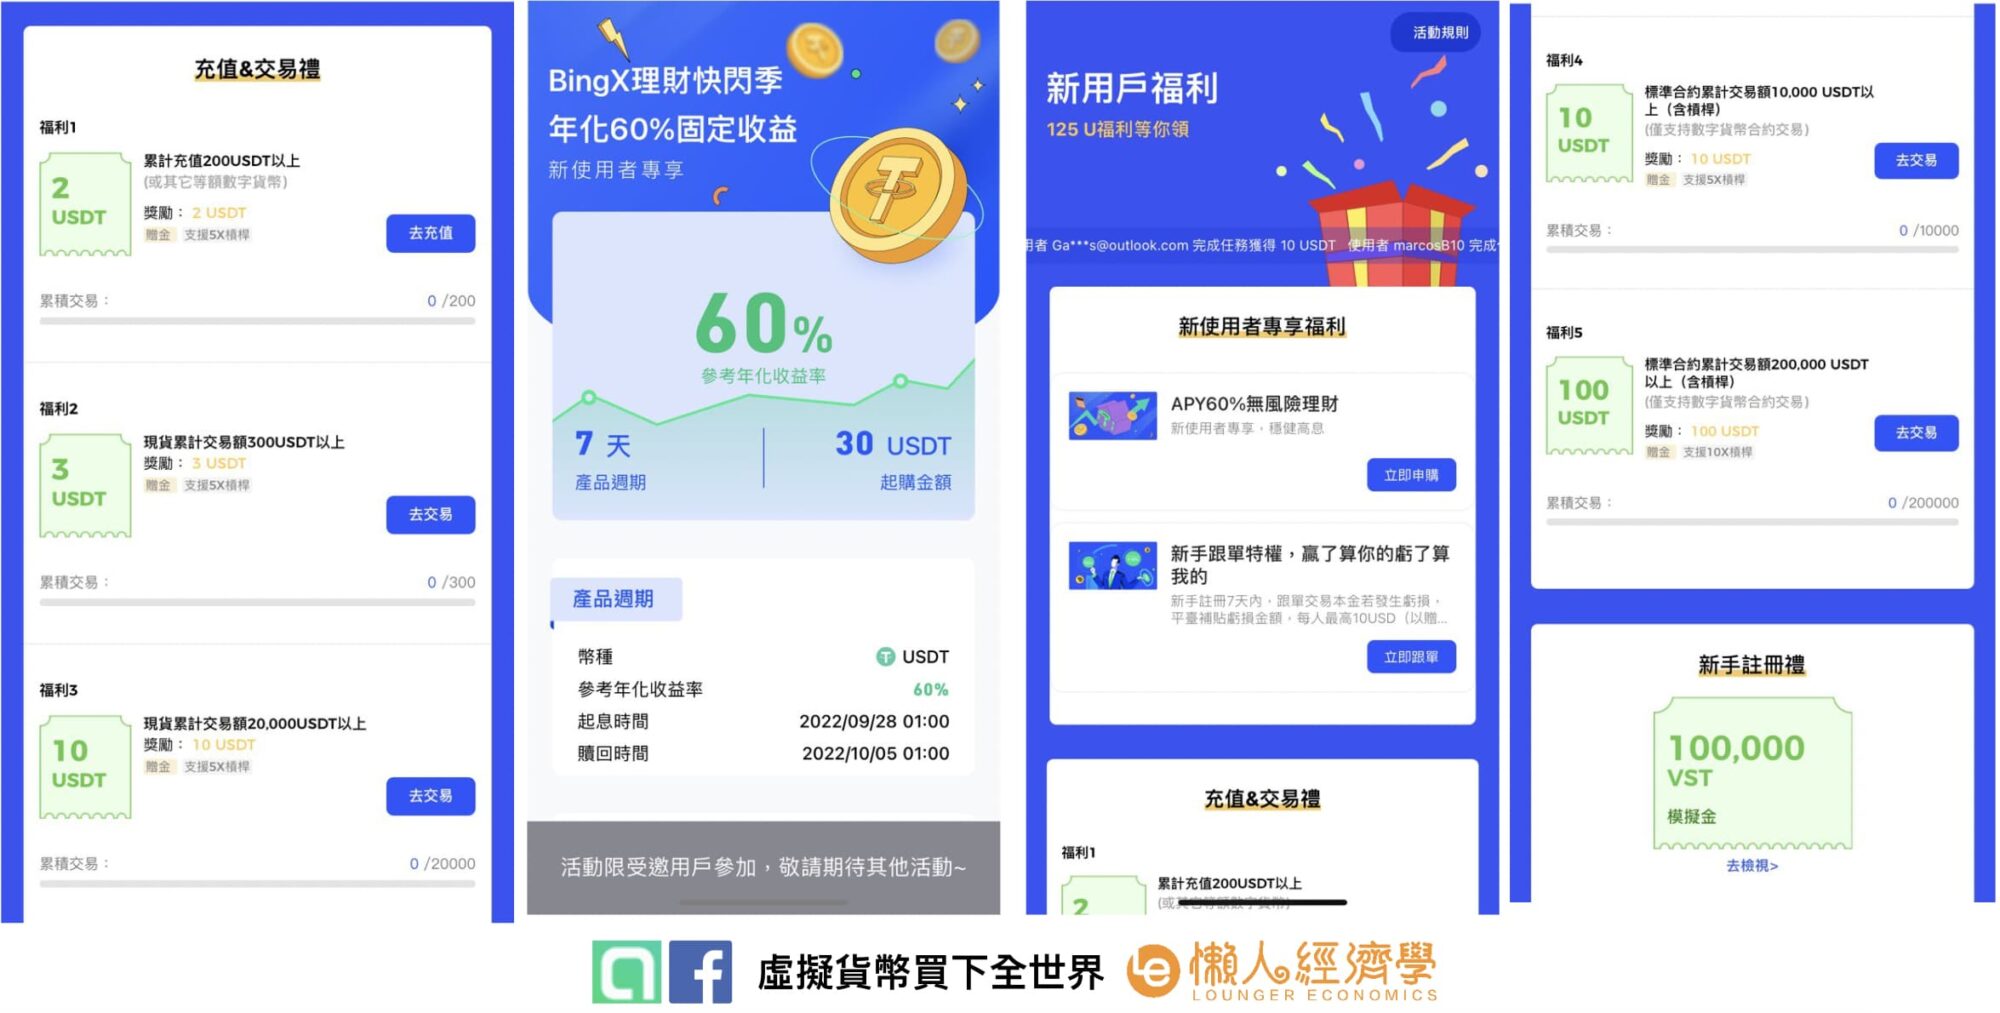 BingX 開戶推薦邀請碼